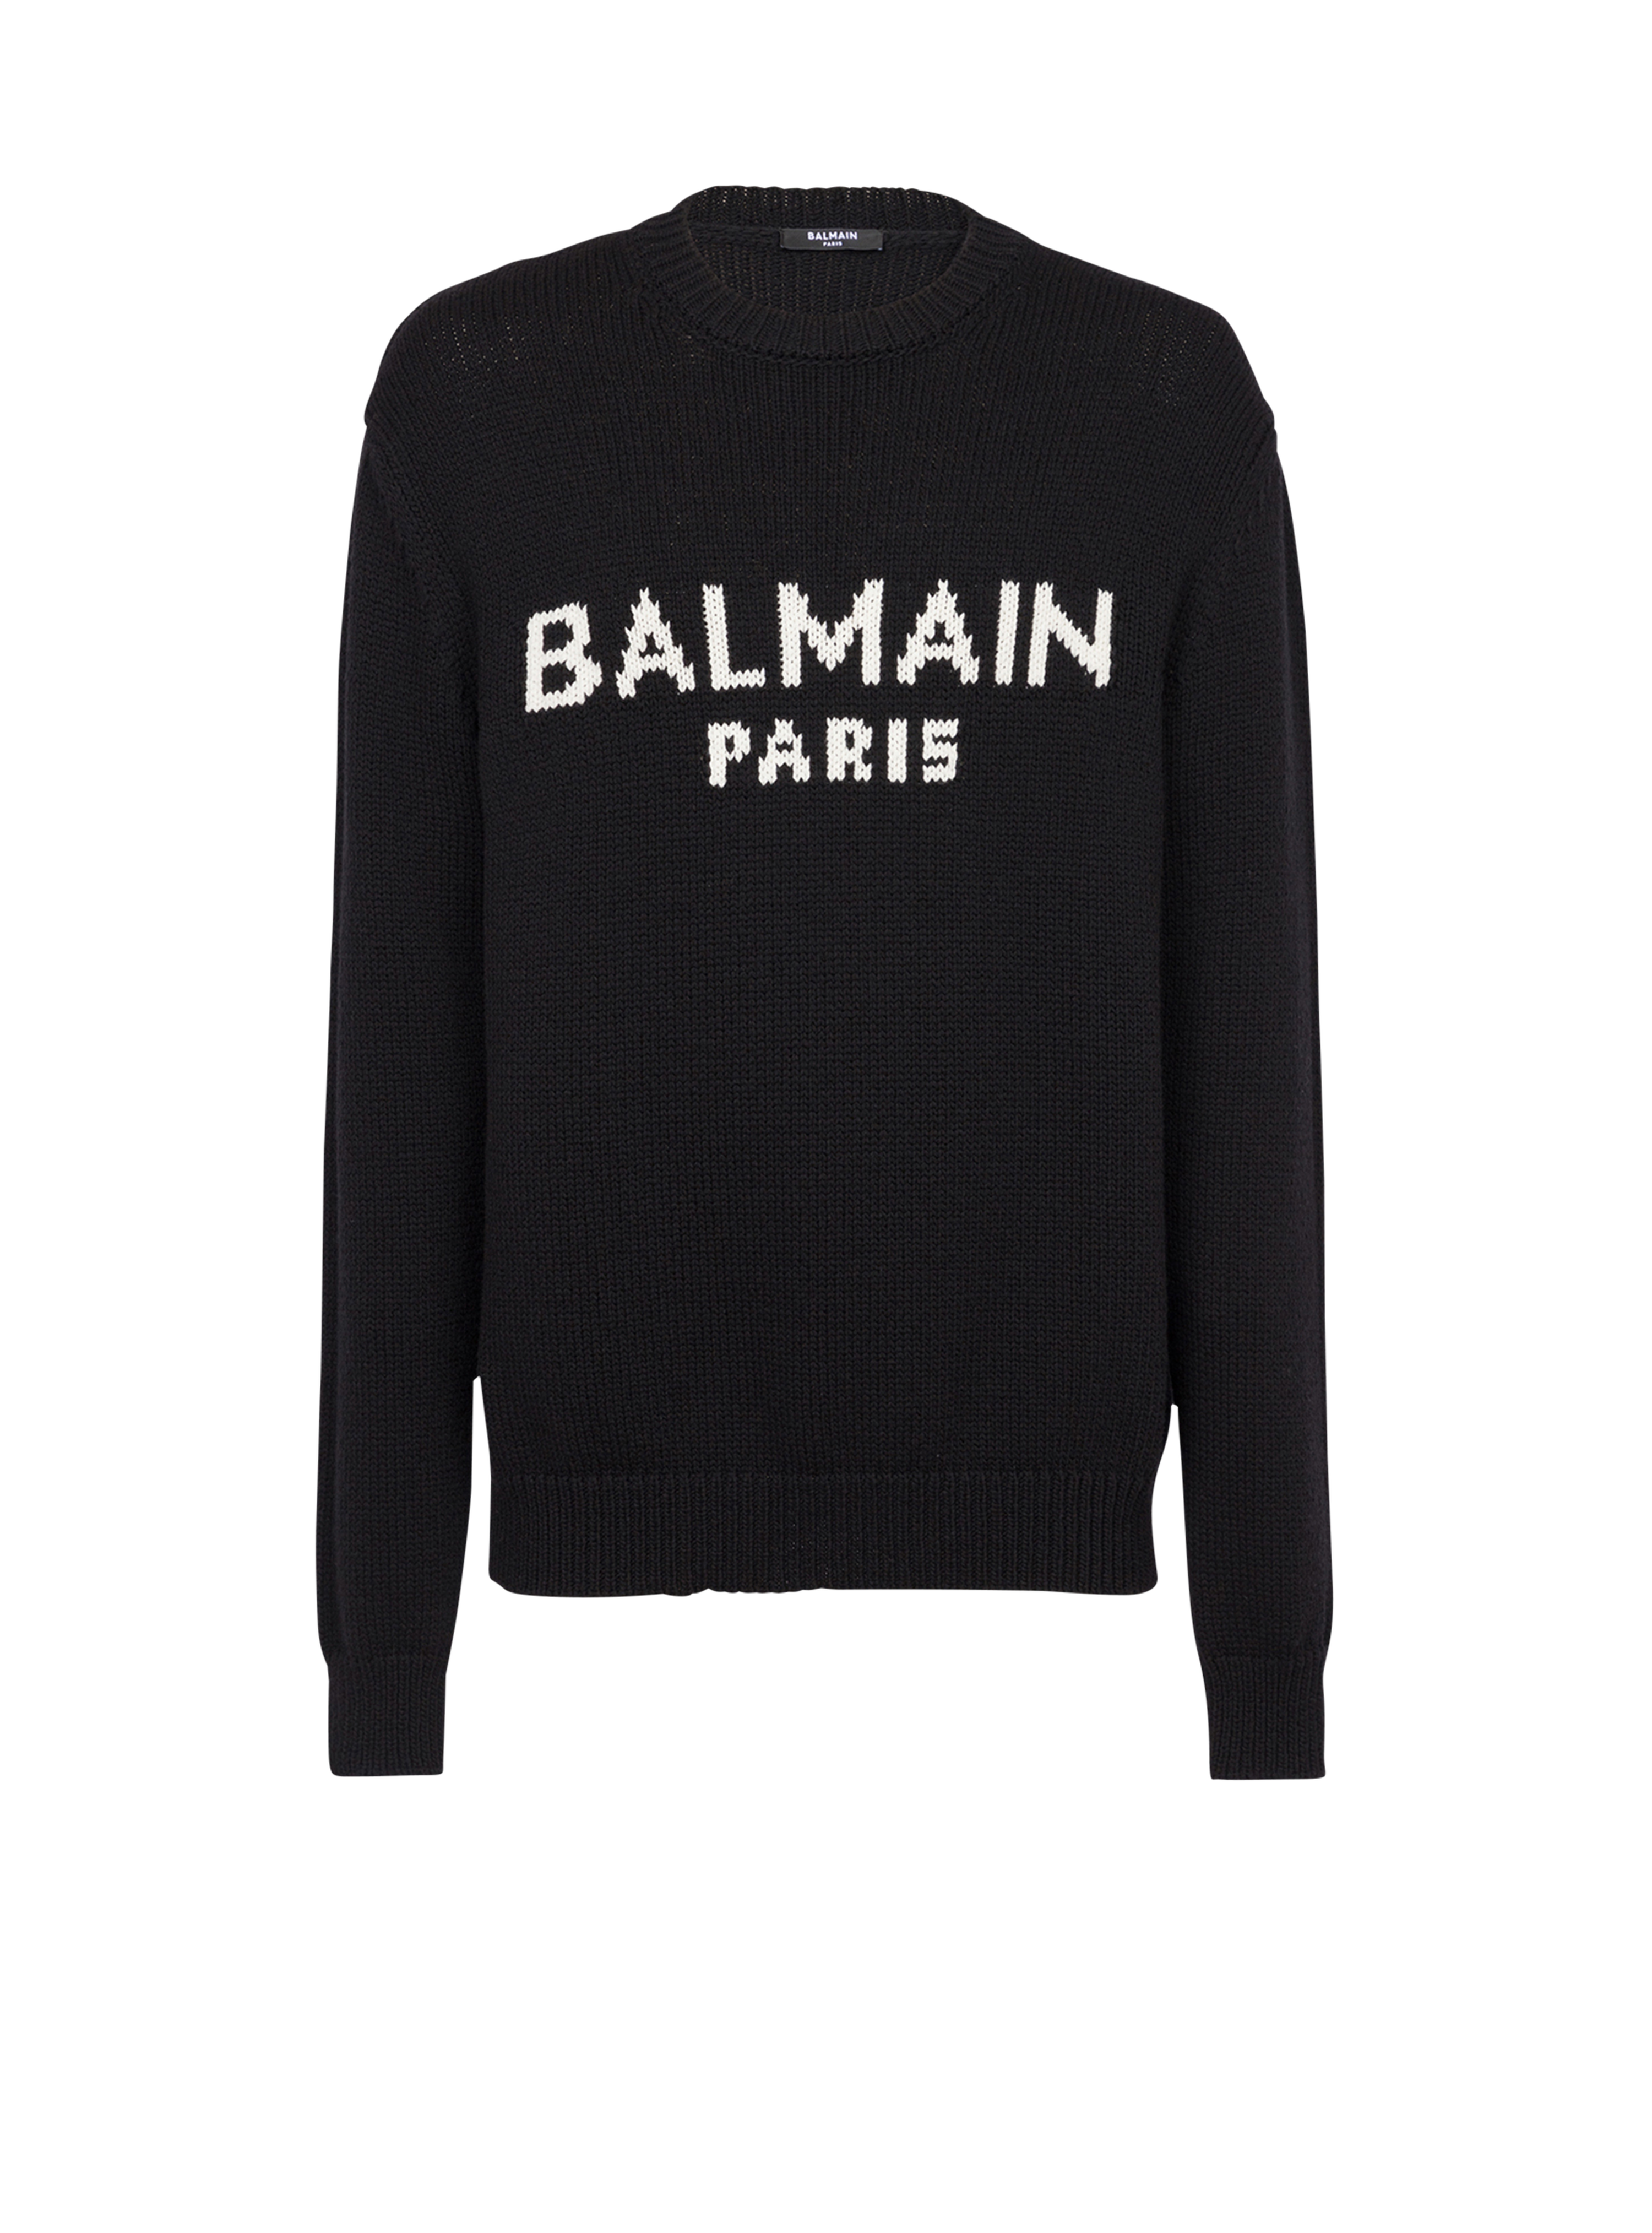 Merino wool sweater with white Balmain Paris logo, black